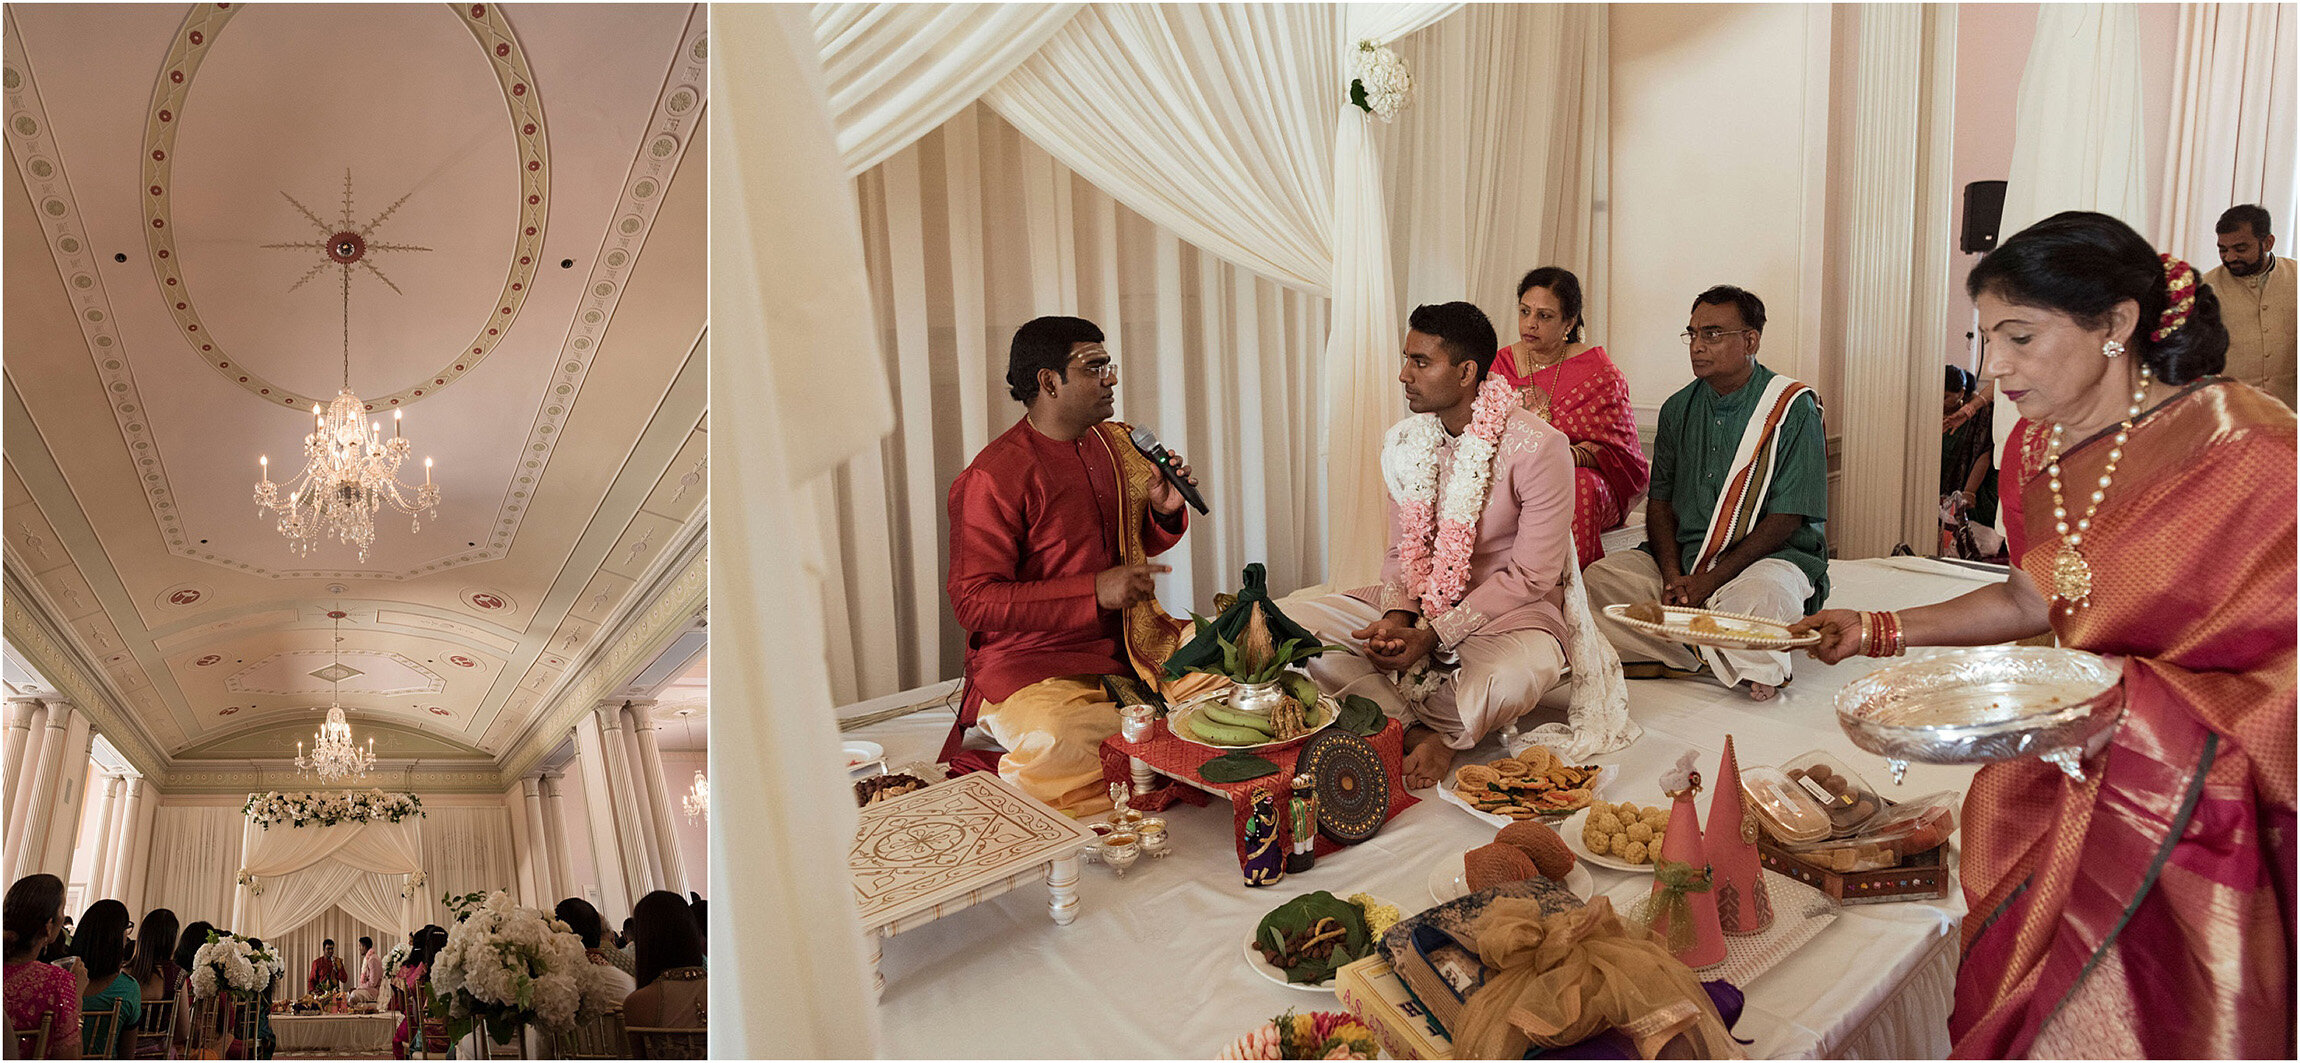 ©FianderFoto_Hindu Wedding_Bermuda_153.jpg